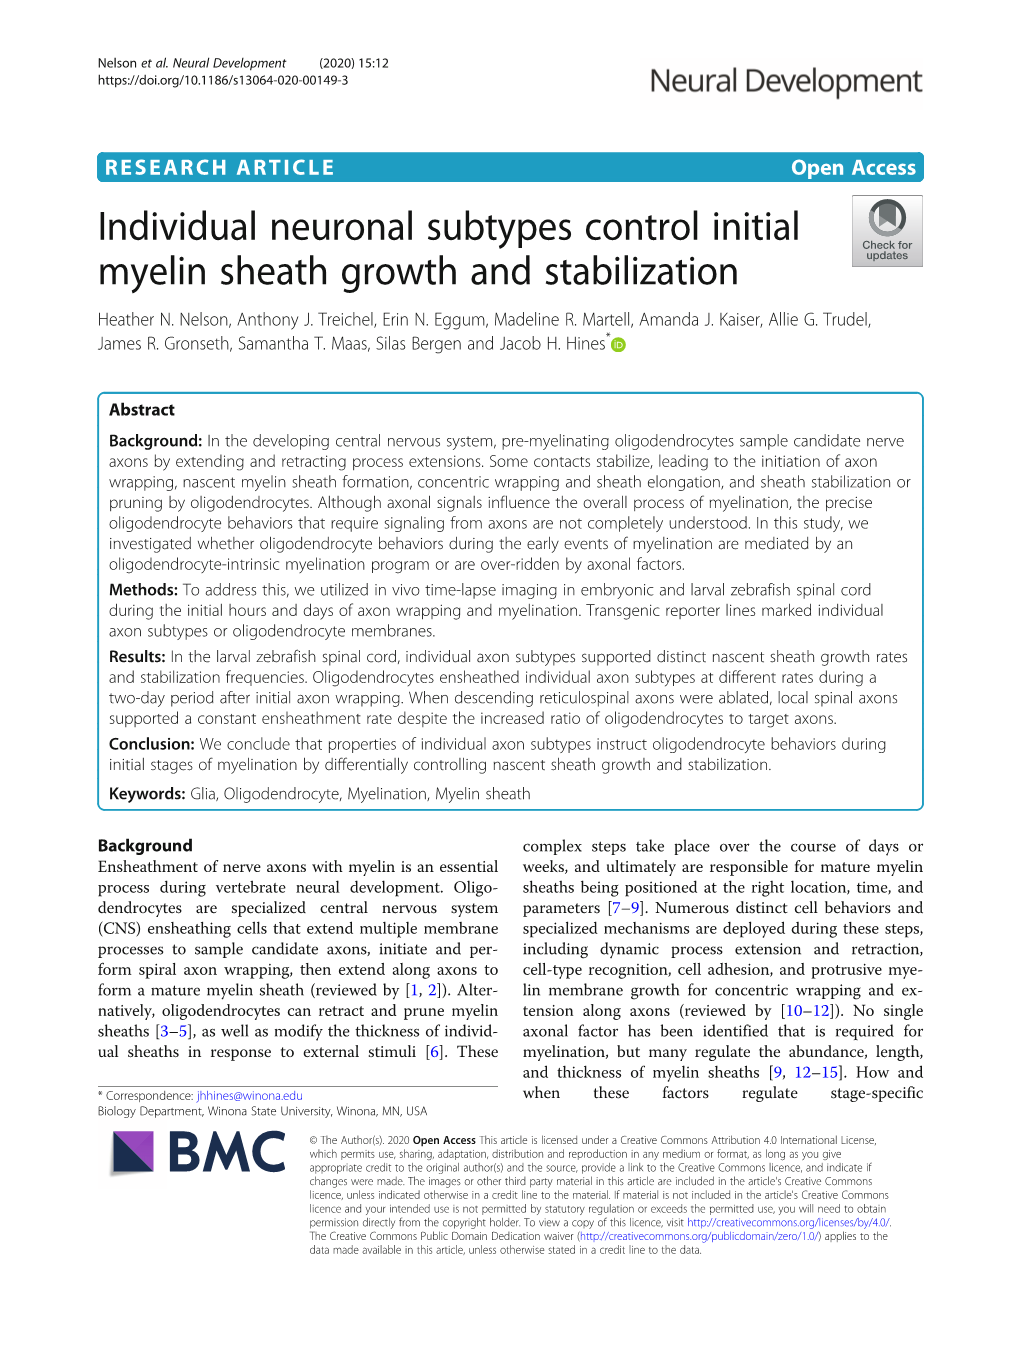 Individual Neuronal Subtypes Control Initial Myelin Sheath Growth and Stabilization Heather N